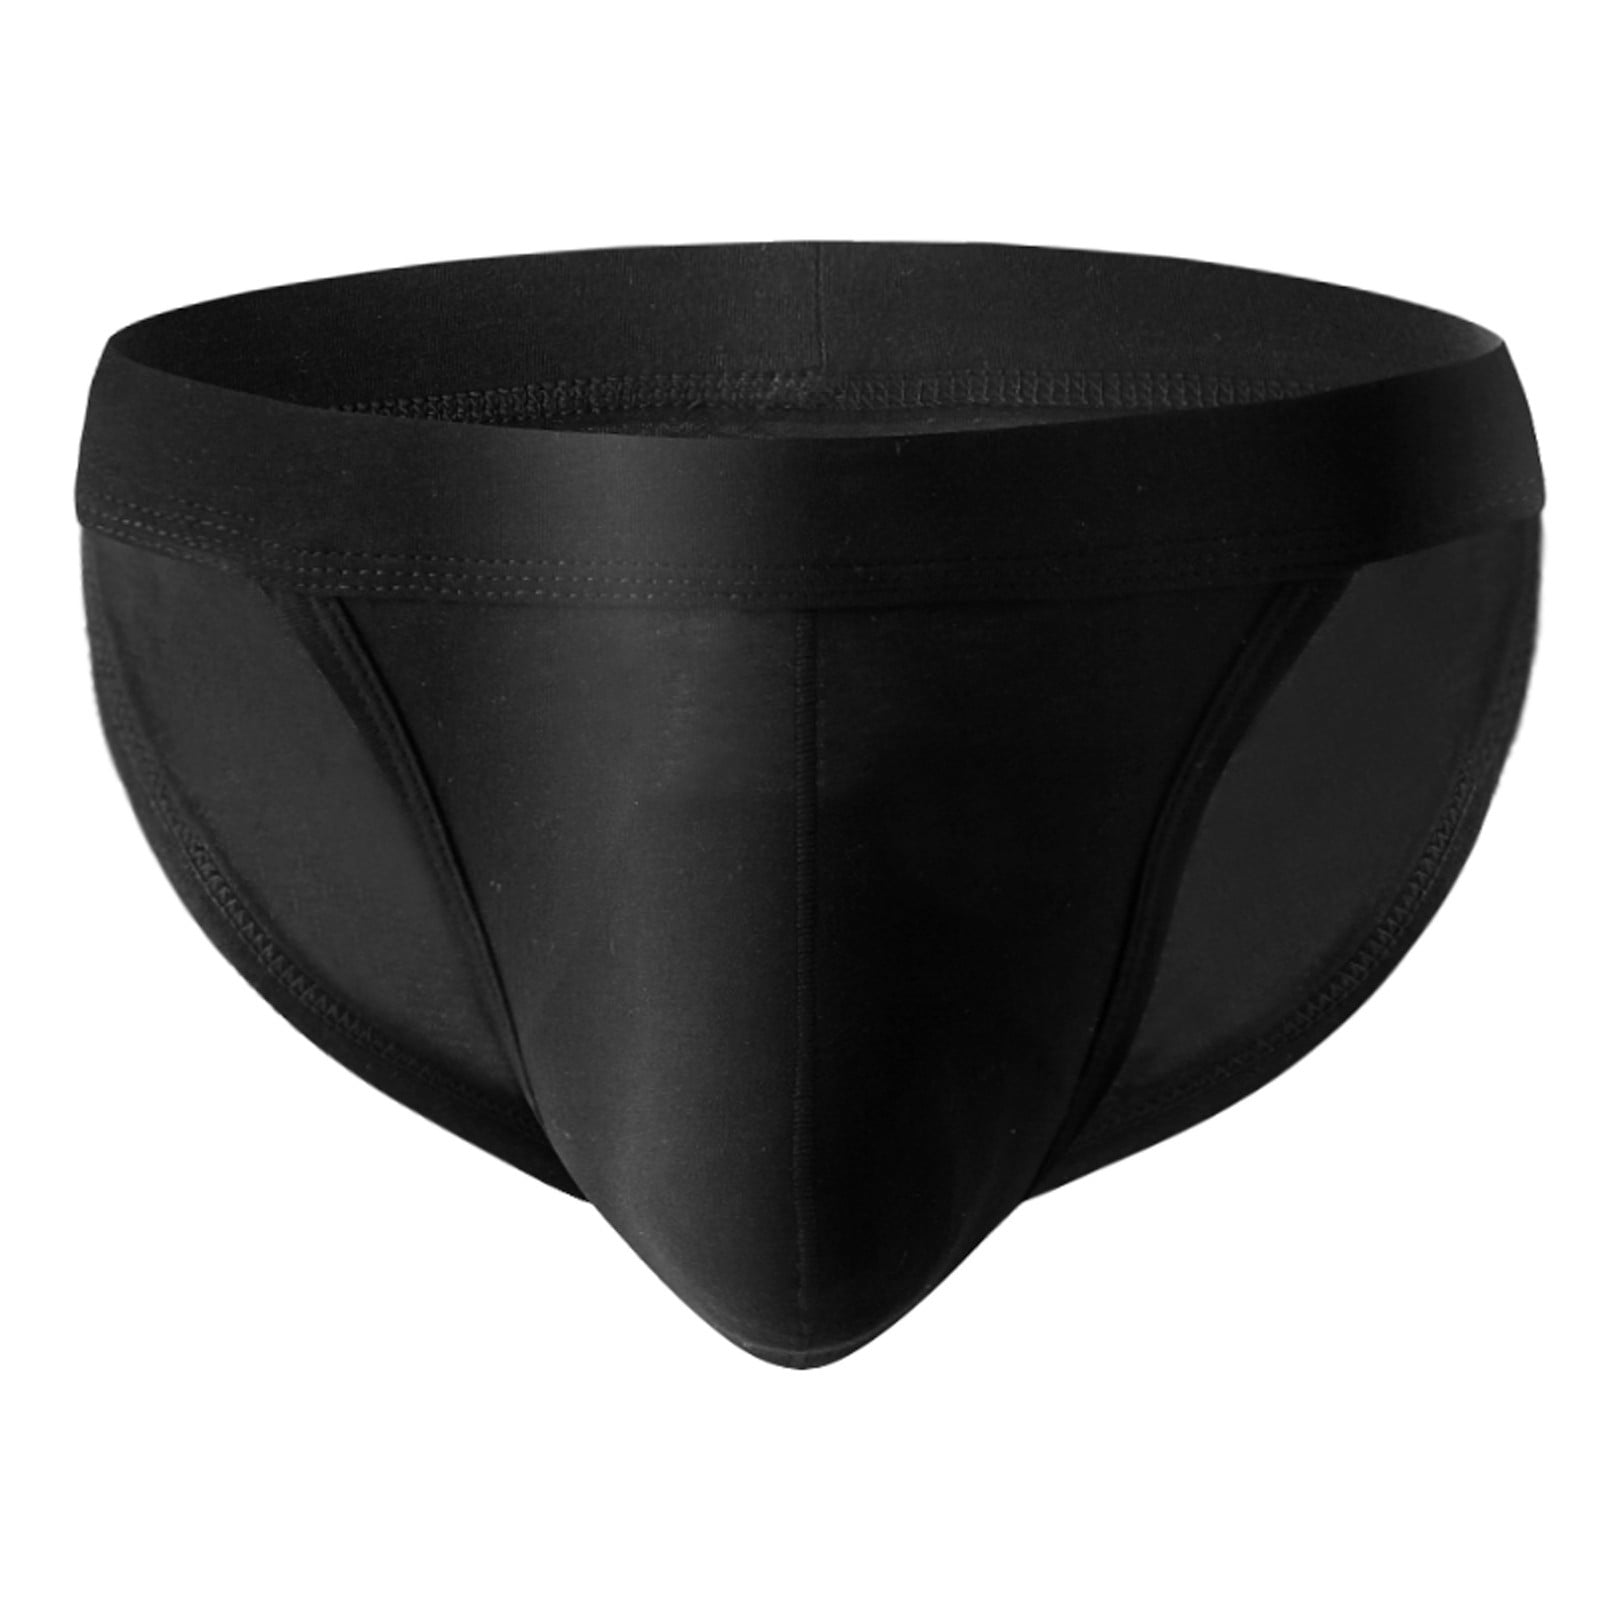 zuwimk Mens Underwear,Men's Jockstrap Underwear Mesh Jock Strap Black,L 